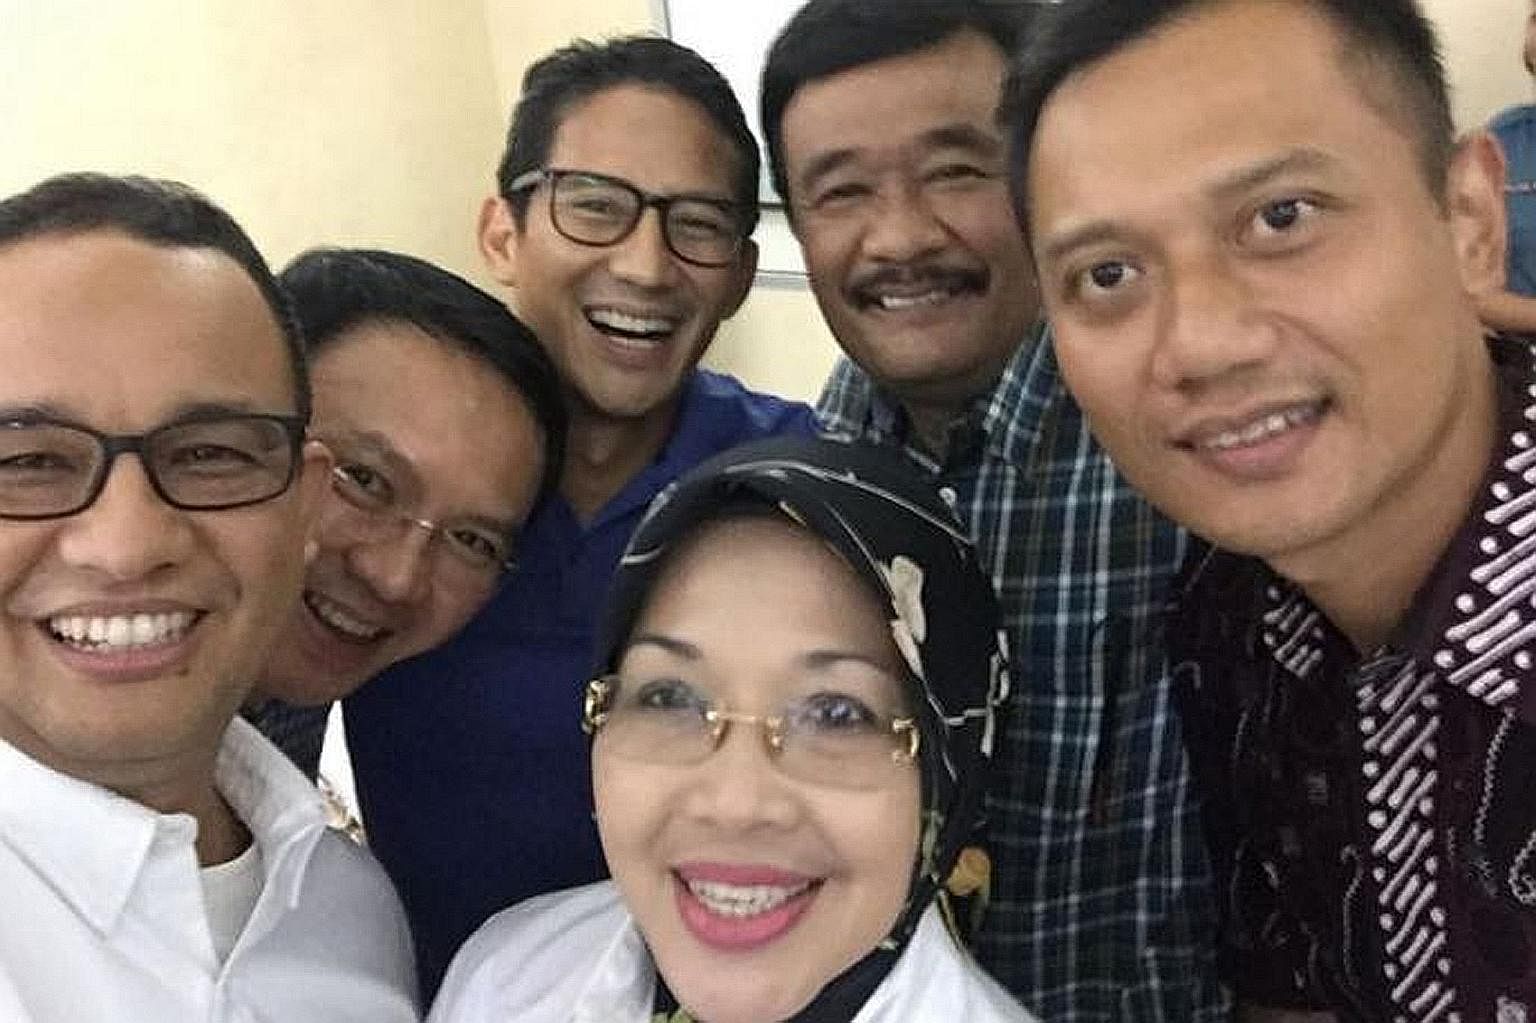 The 2017 Jakarta gubernatorial candidates: (from left) Dr Anies Baswedan, Mr Basuki Tjahaja Purnama, Mr Sandiaga Uno, Dr Sylviana Murni, Mr Djarot Saiful Hidayat and Mr Agus Harimurti Yudhoyono.